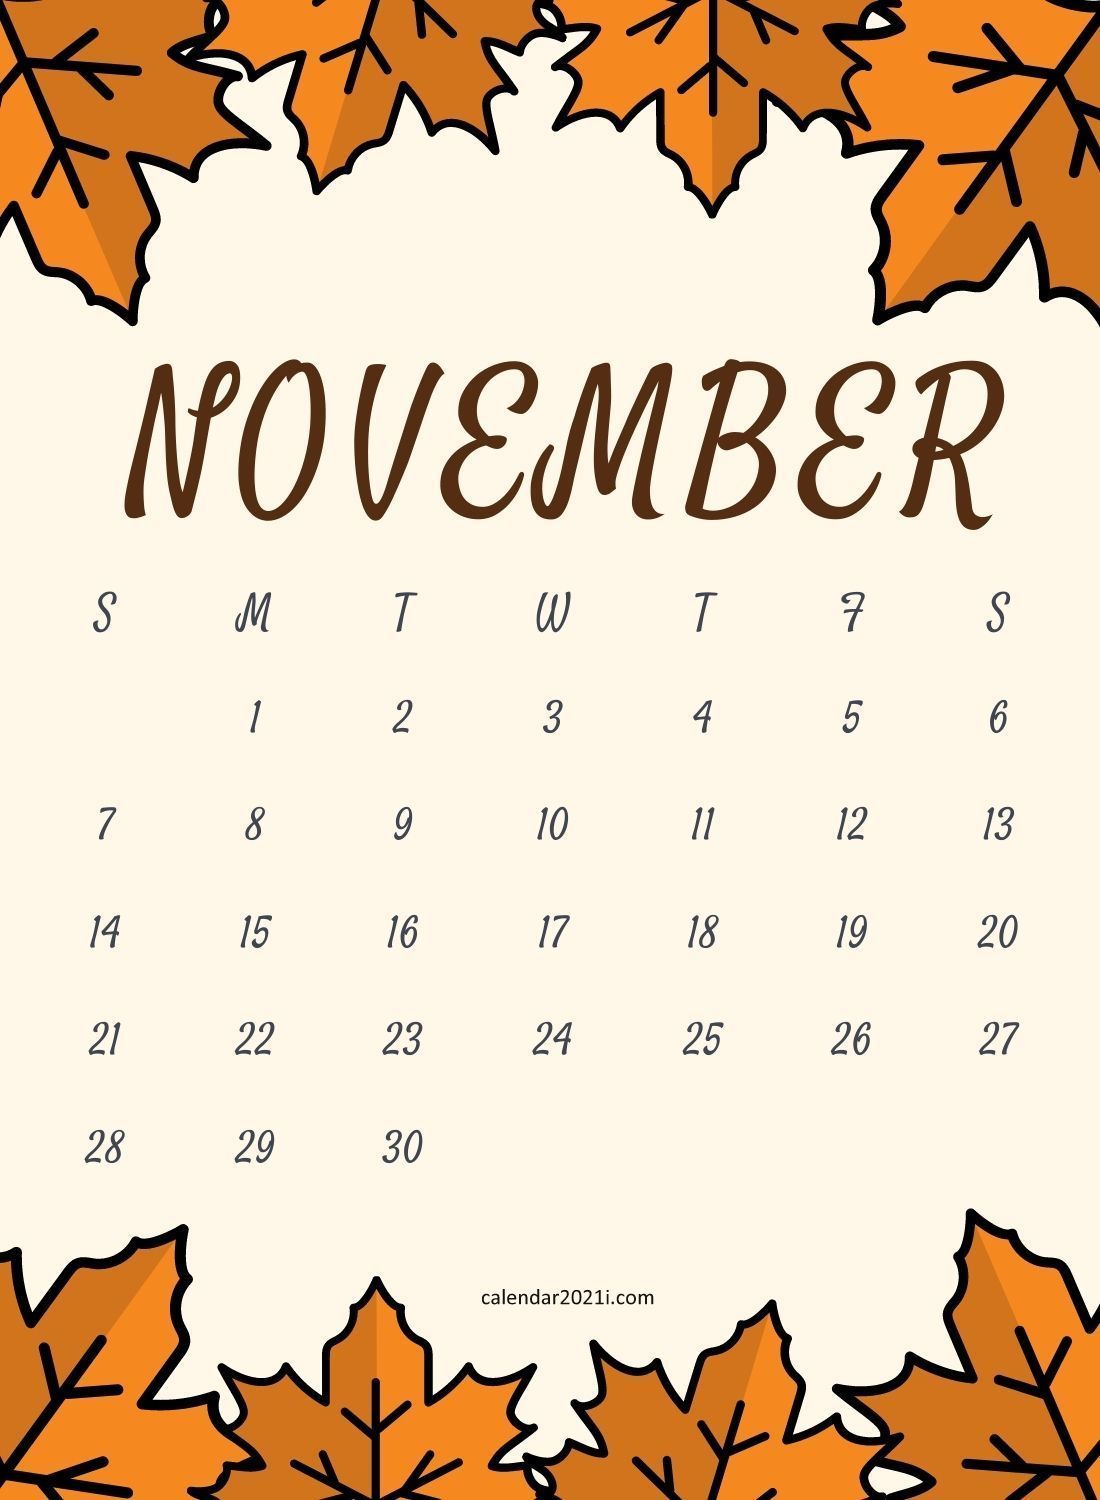 November 2021 Calendar Wallpapers Wallpaper Cave